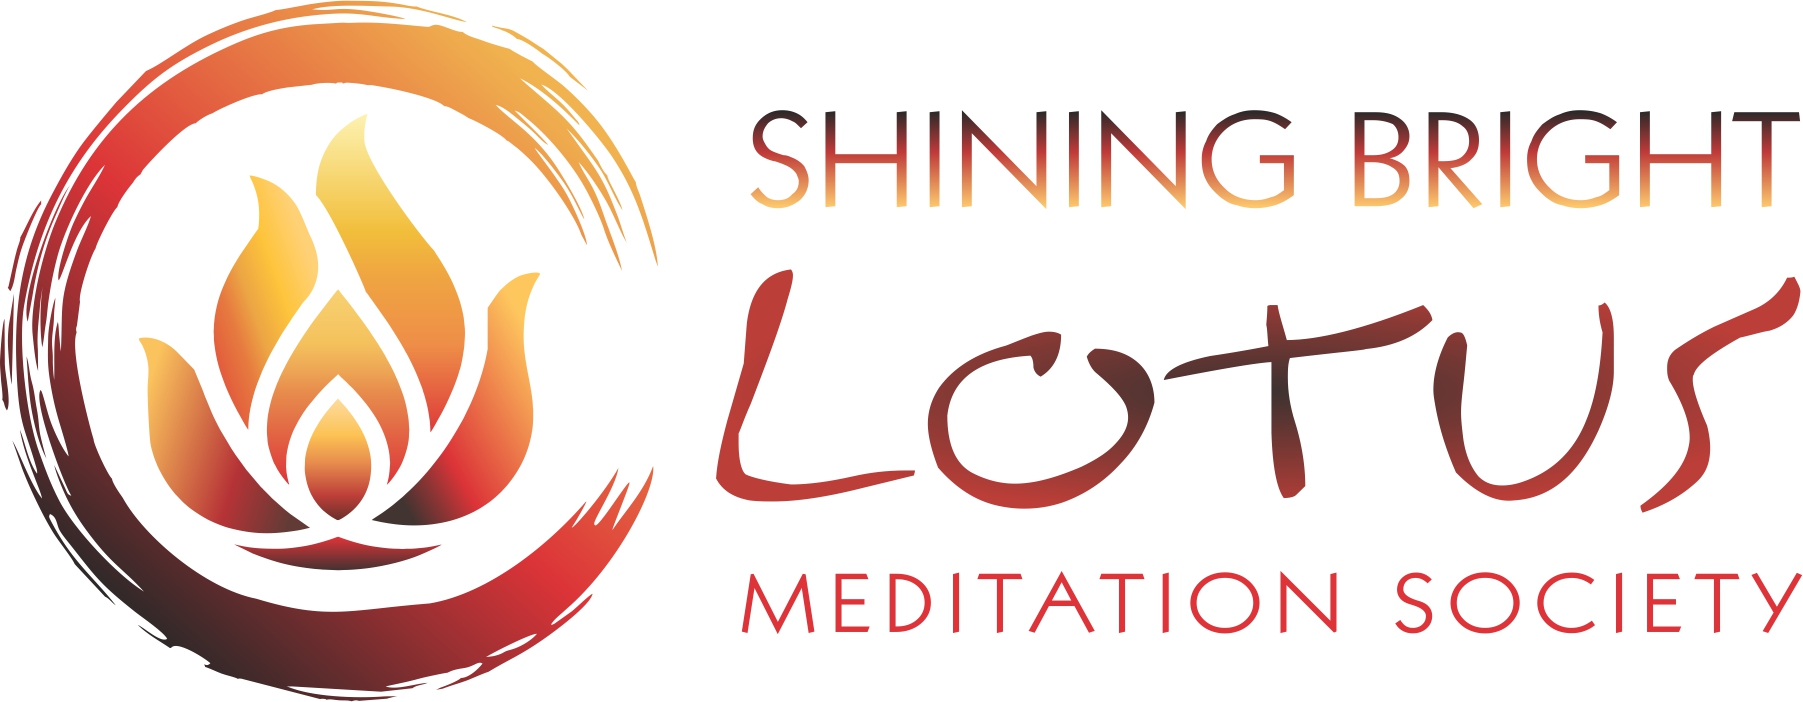 Teleosis Foundation - Shining Bright Lotus Meditation Society logo